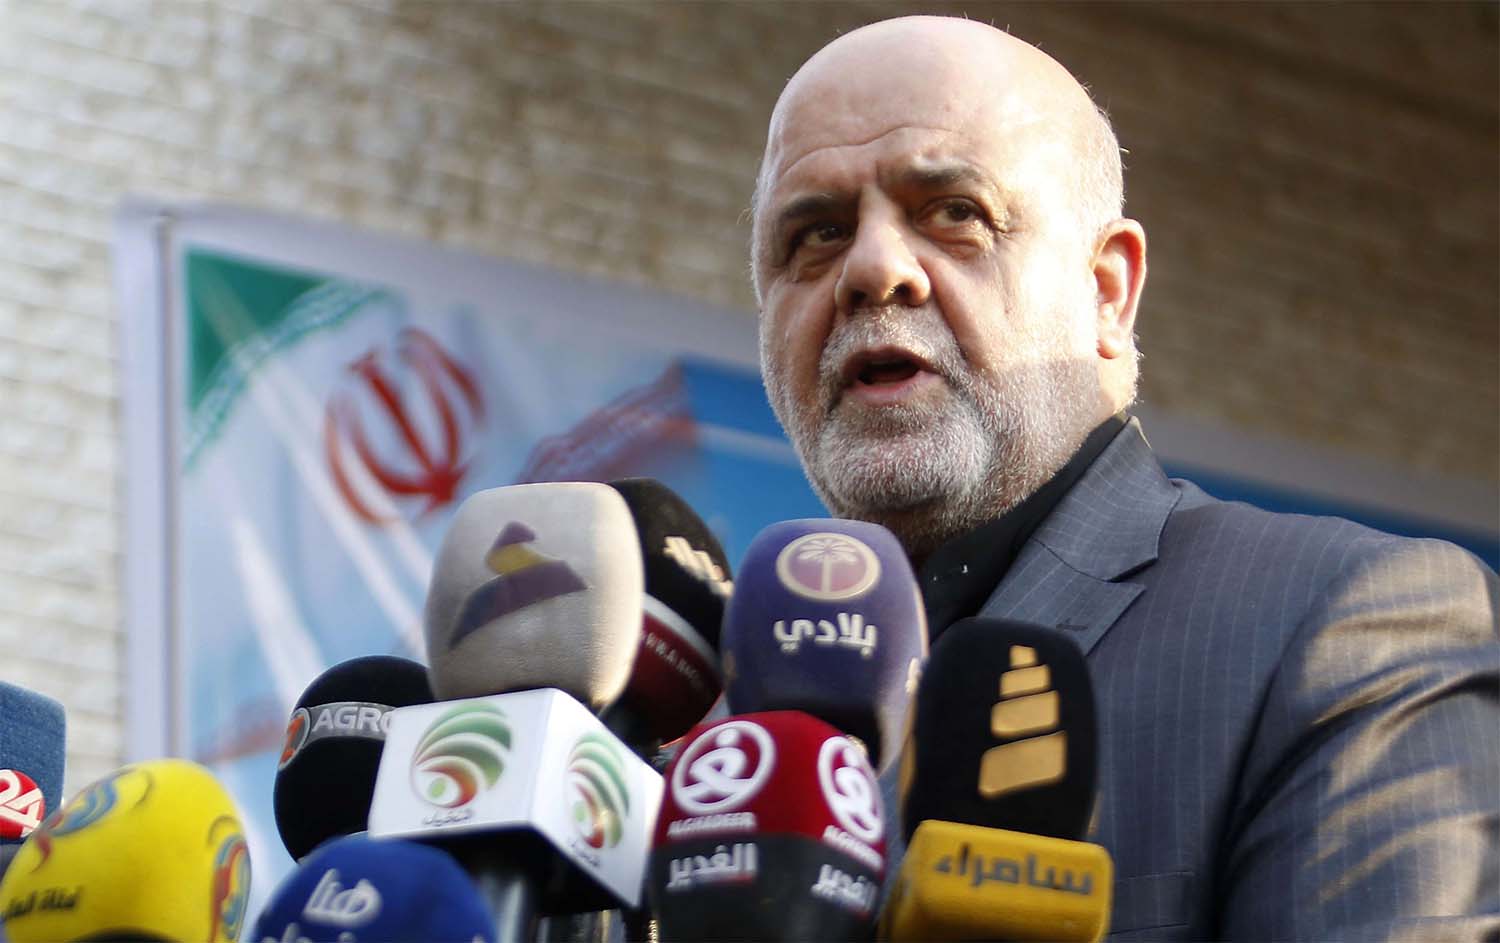 Iraj Masjedi, Iran's ambassador to Iraq